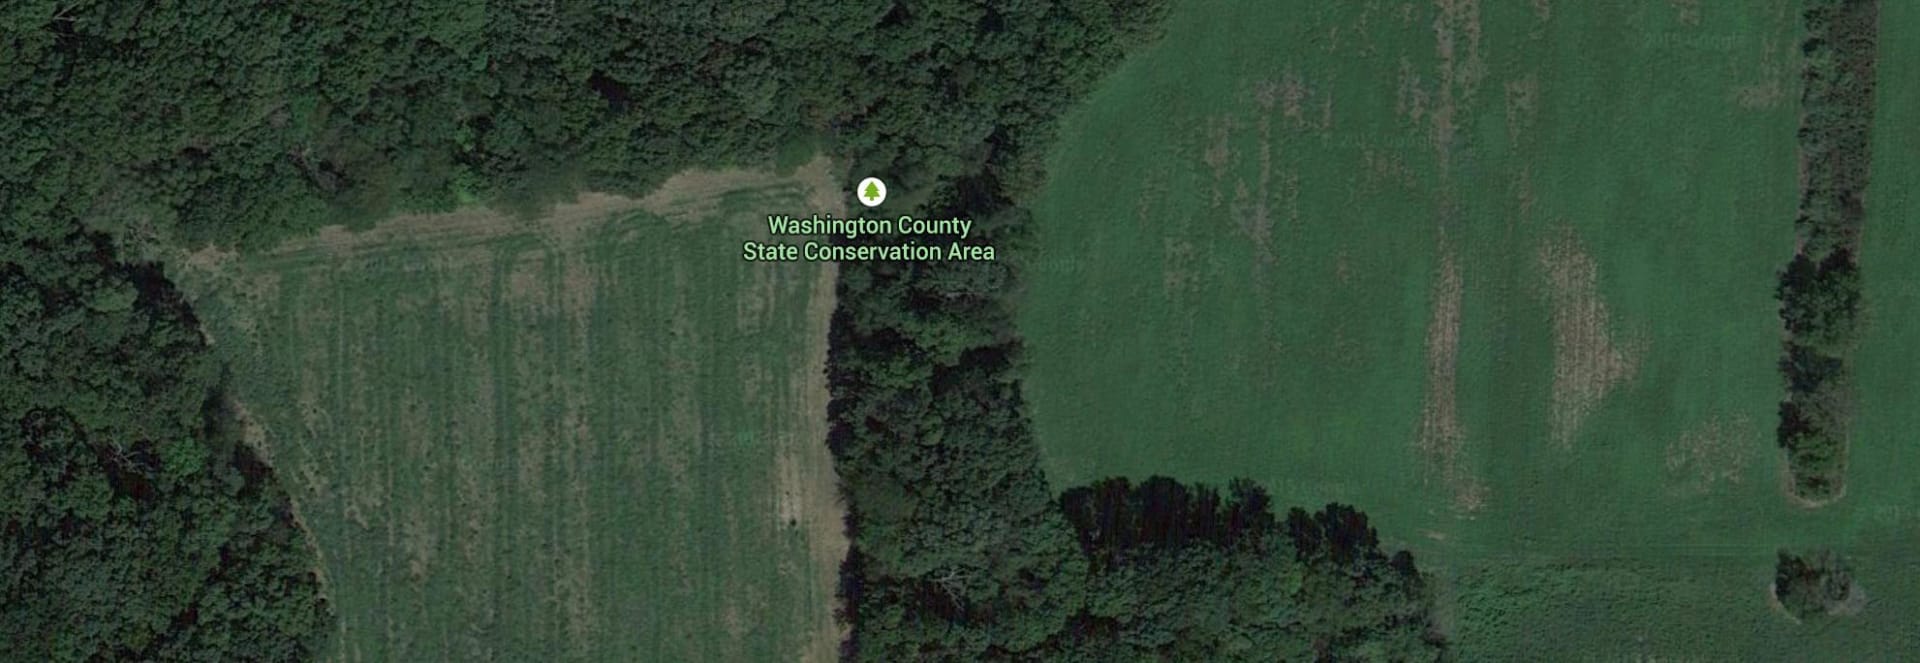 Washington County State Recreational Area